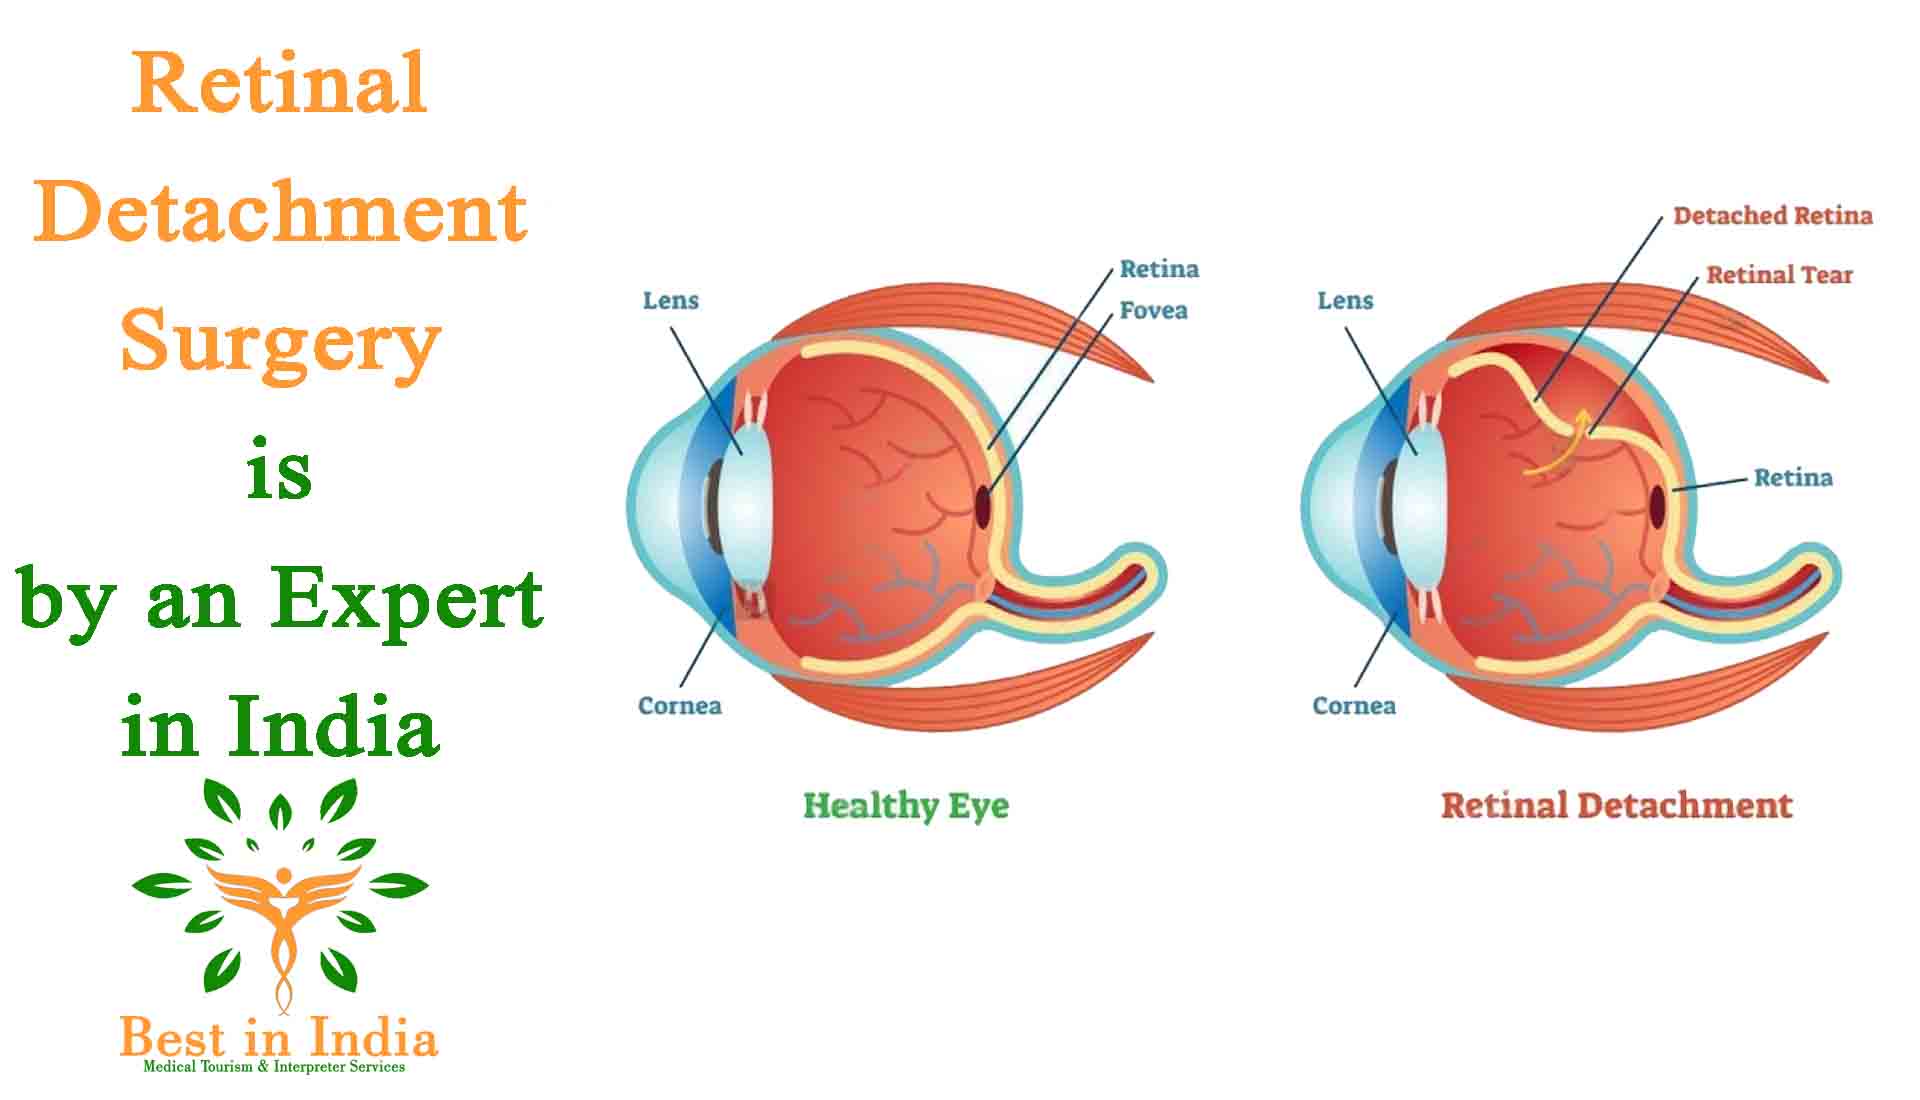 What Causes Retinal Detachment?